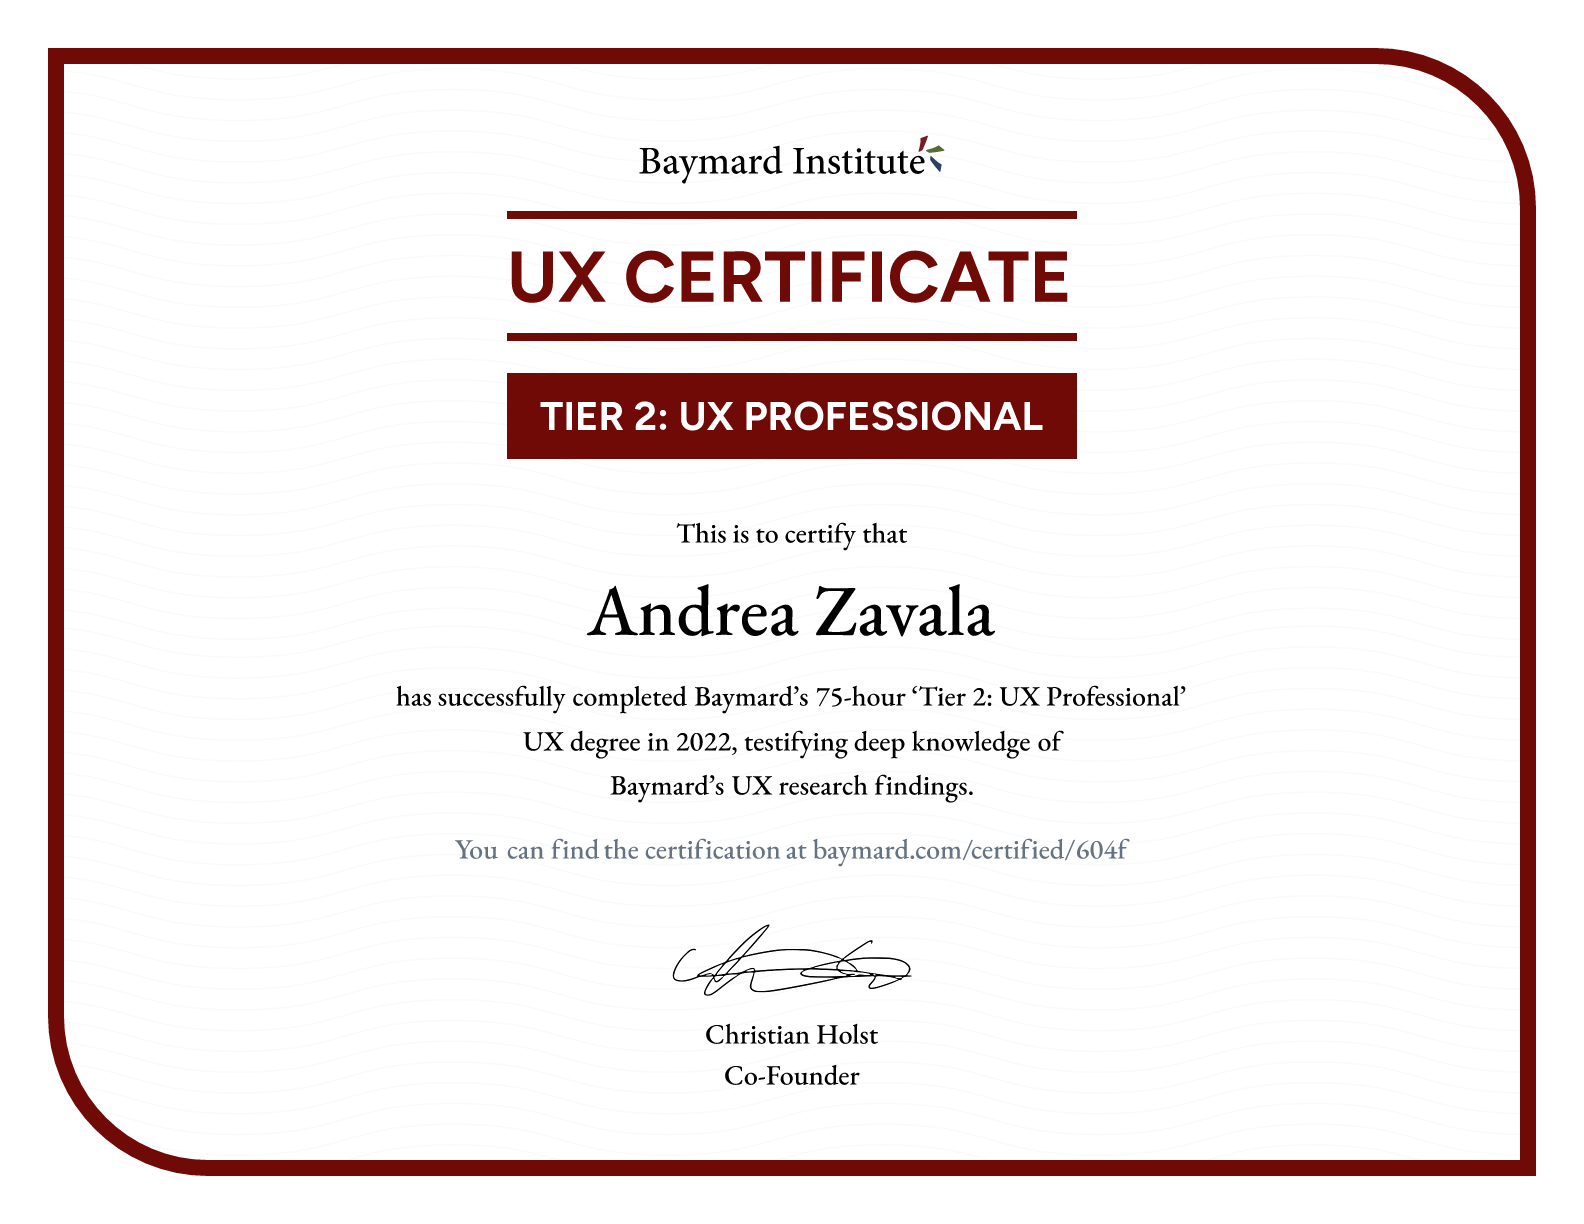 Andrea Zavala’s certificate